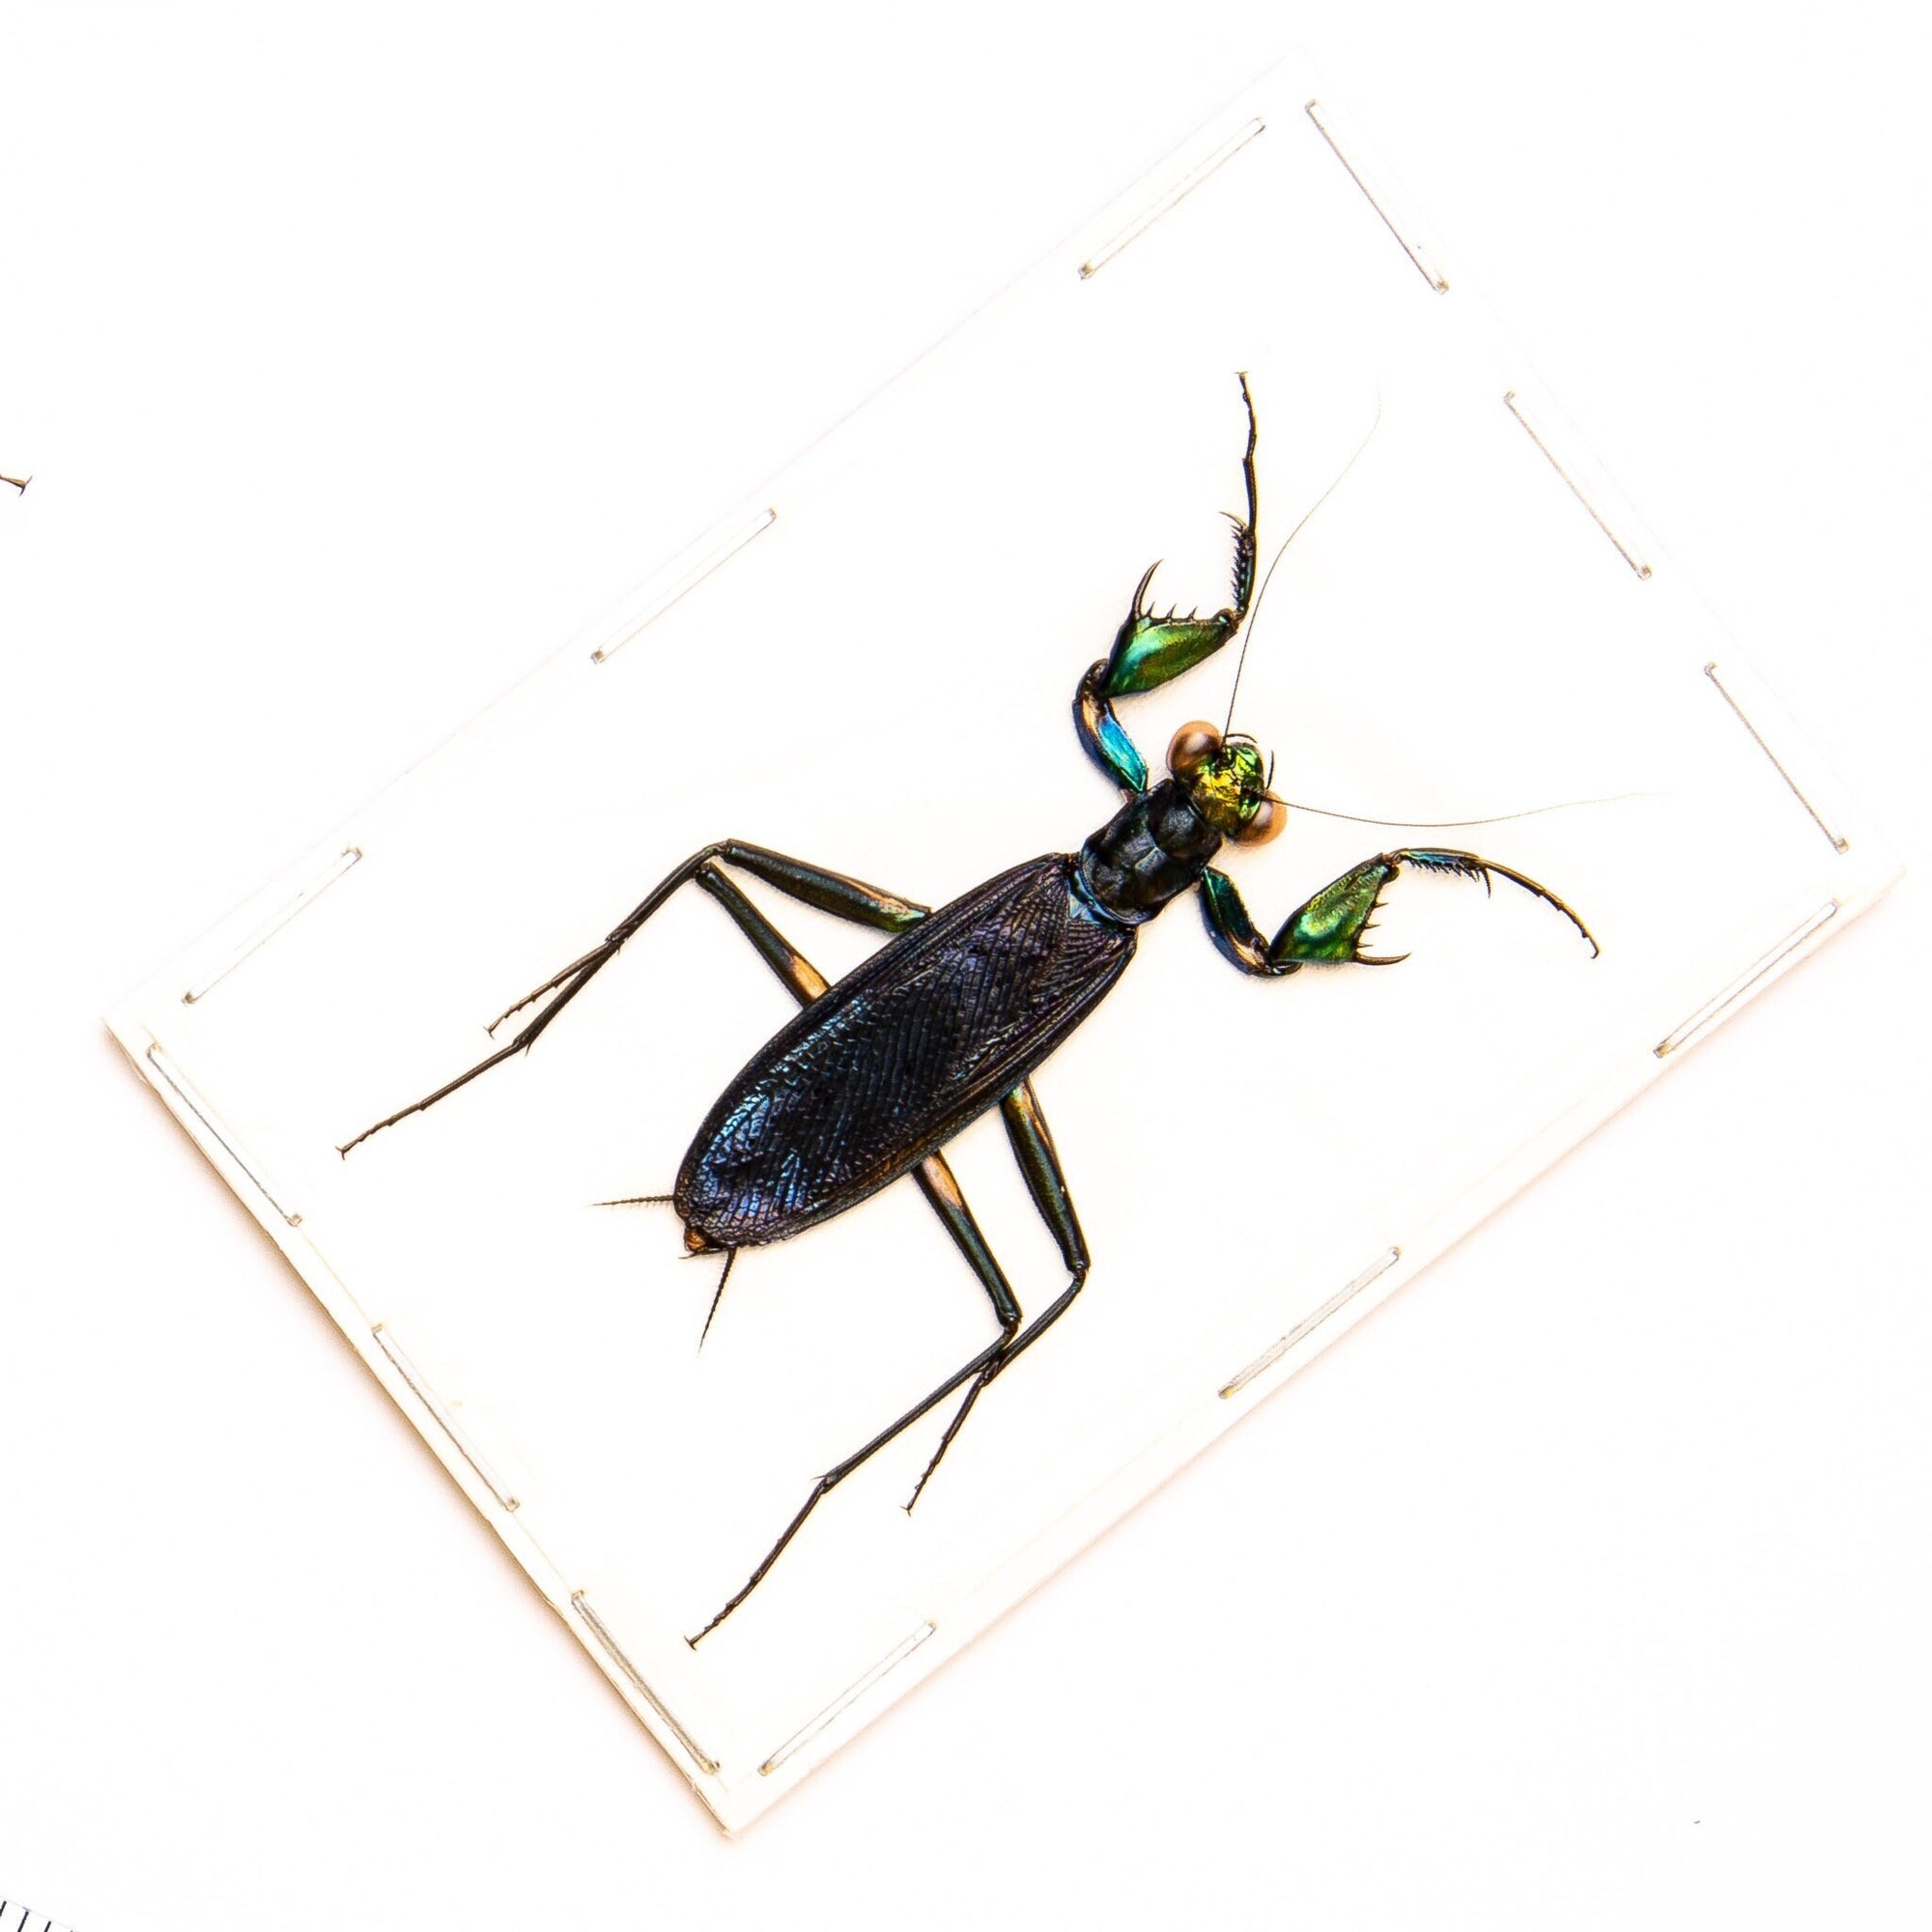 Metallic Praying Mantis (Metallyticus splendidus) A1 Male Specimen